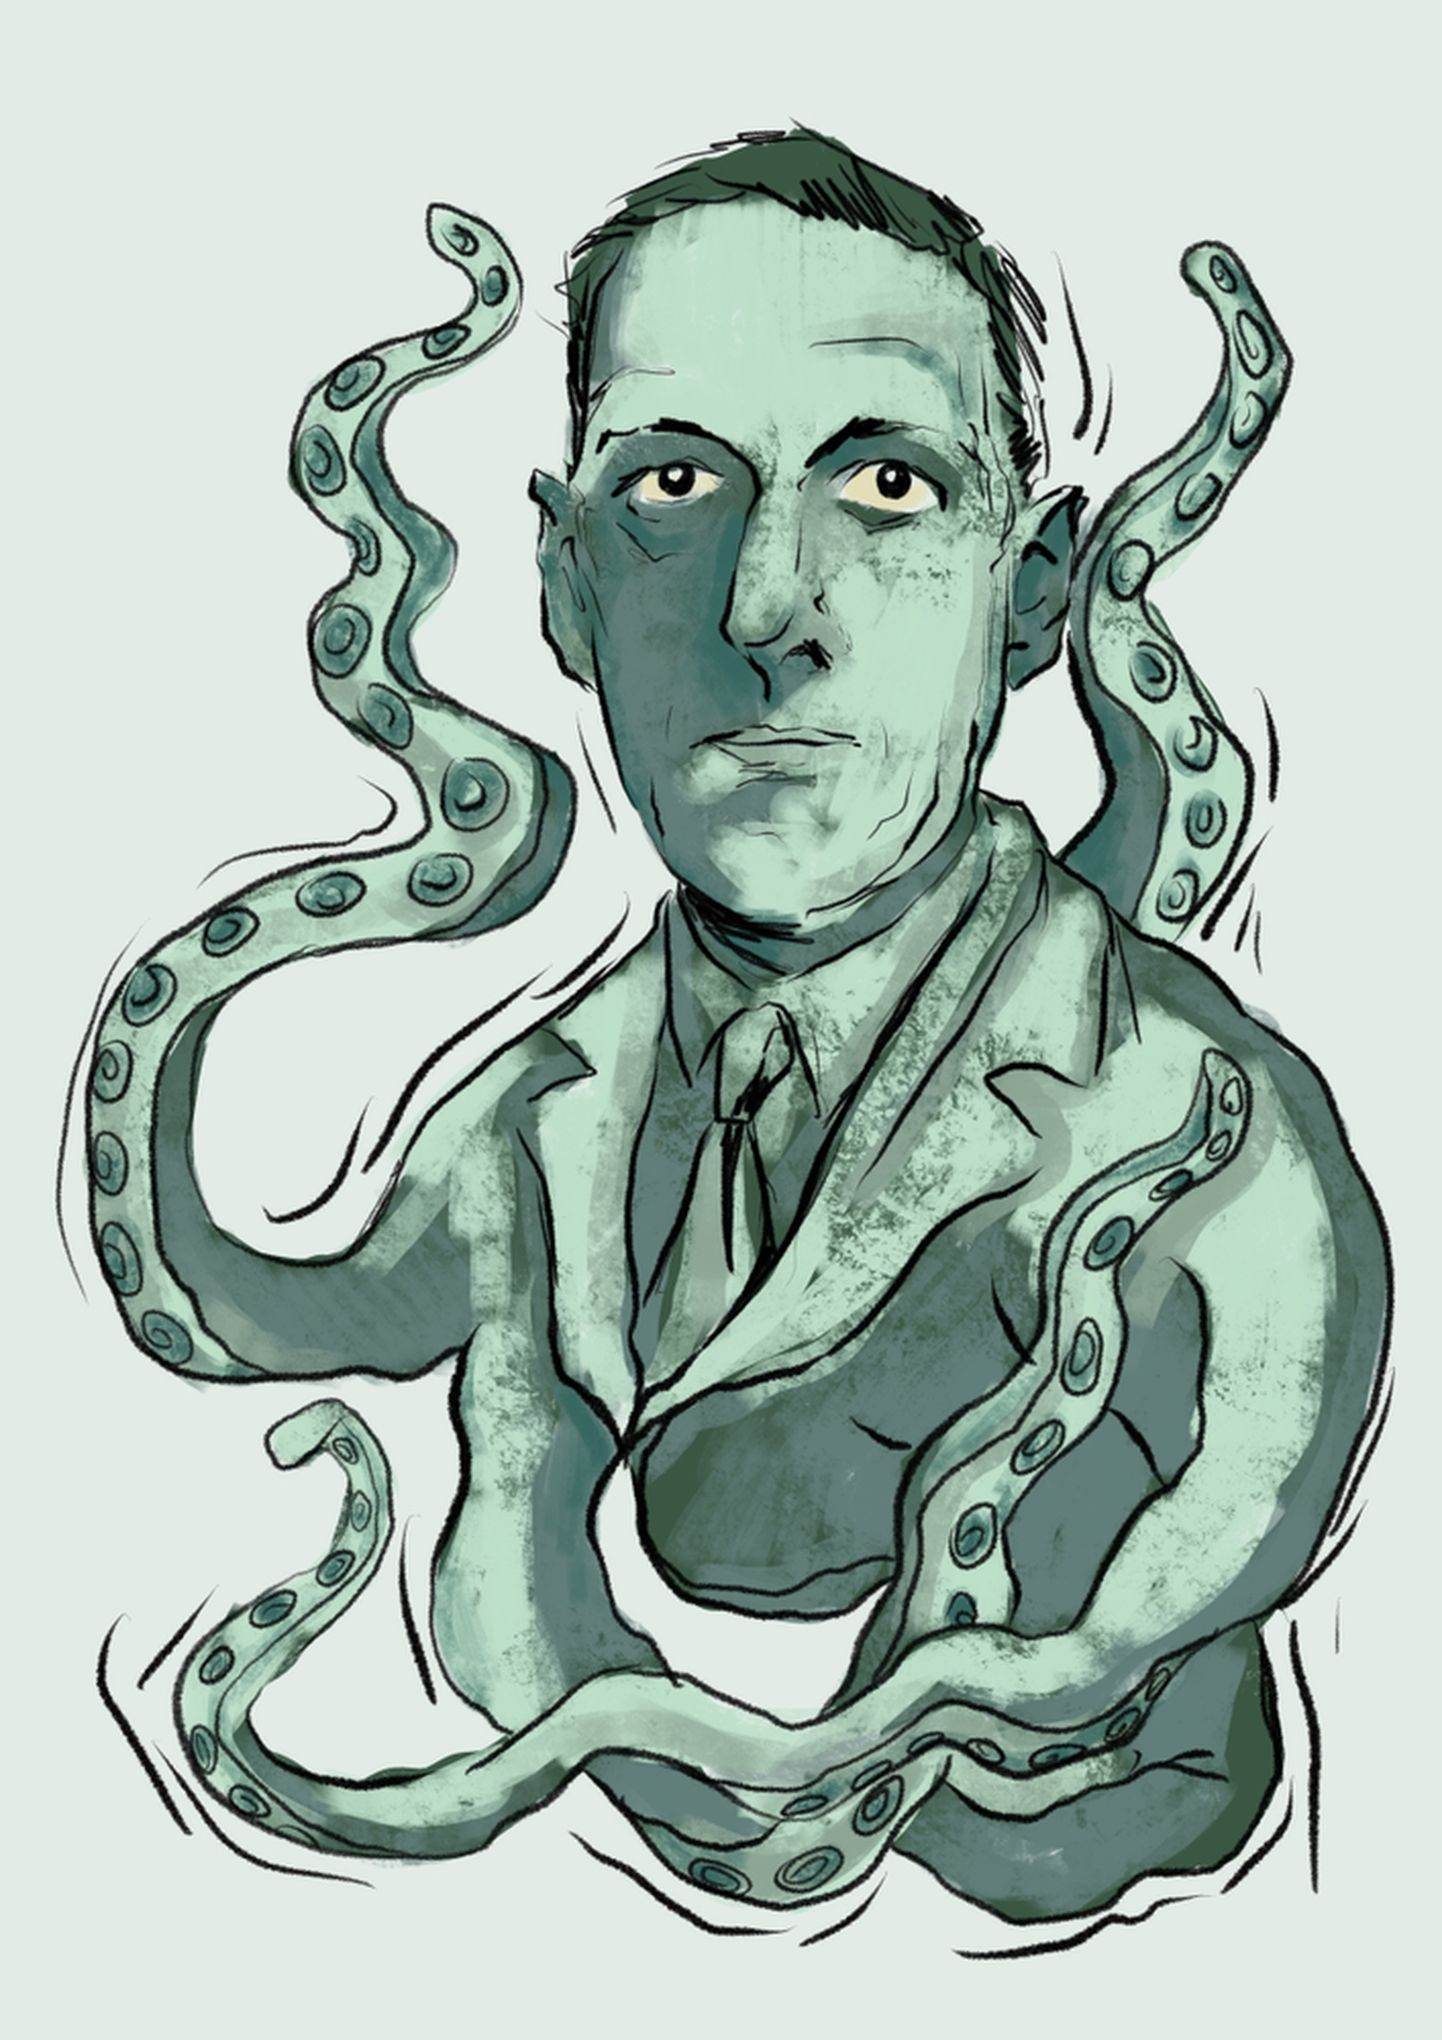 H. P. Lovecraft.